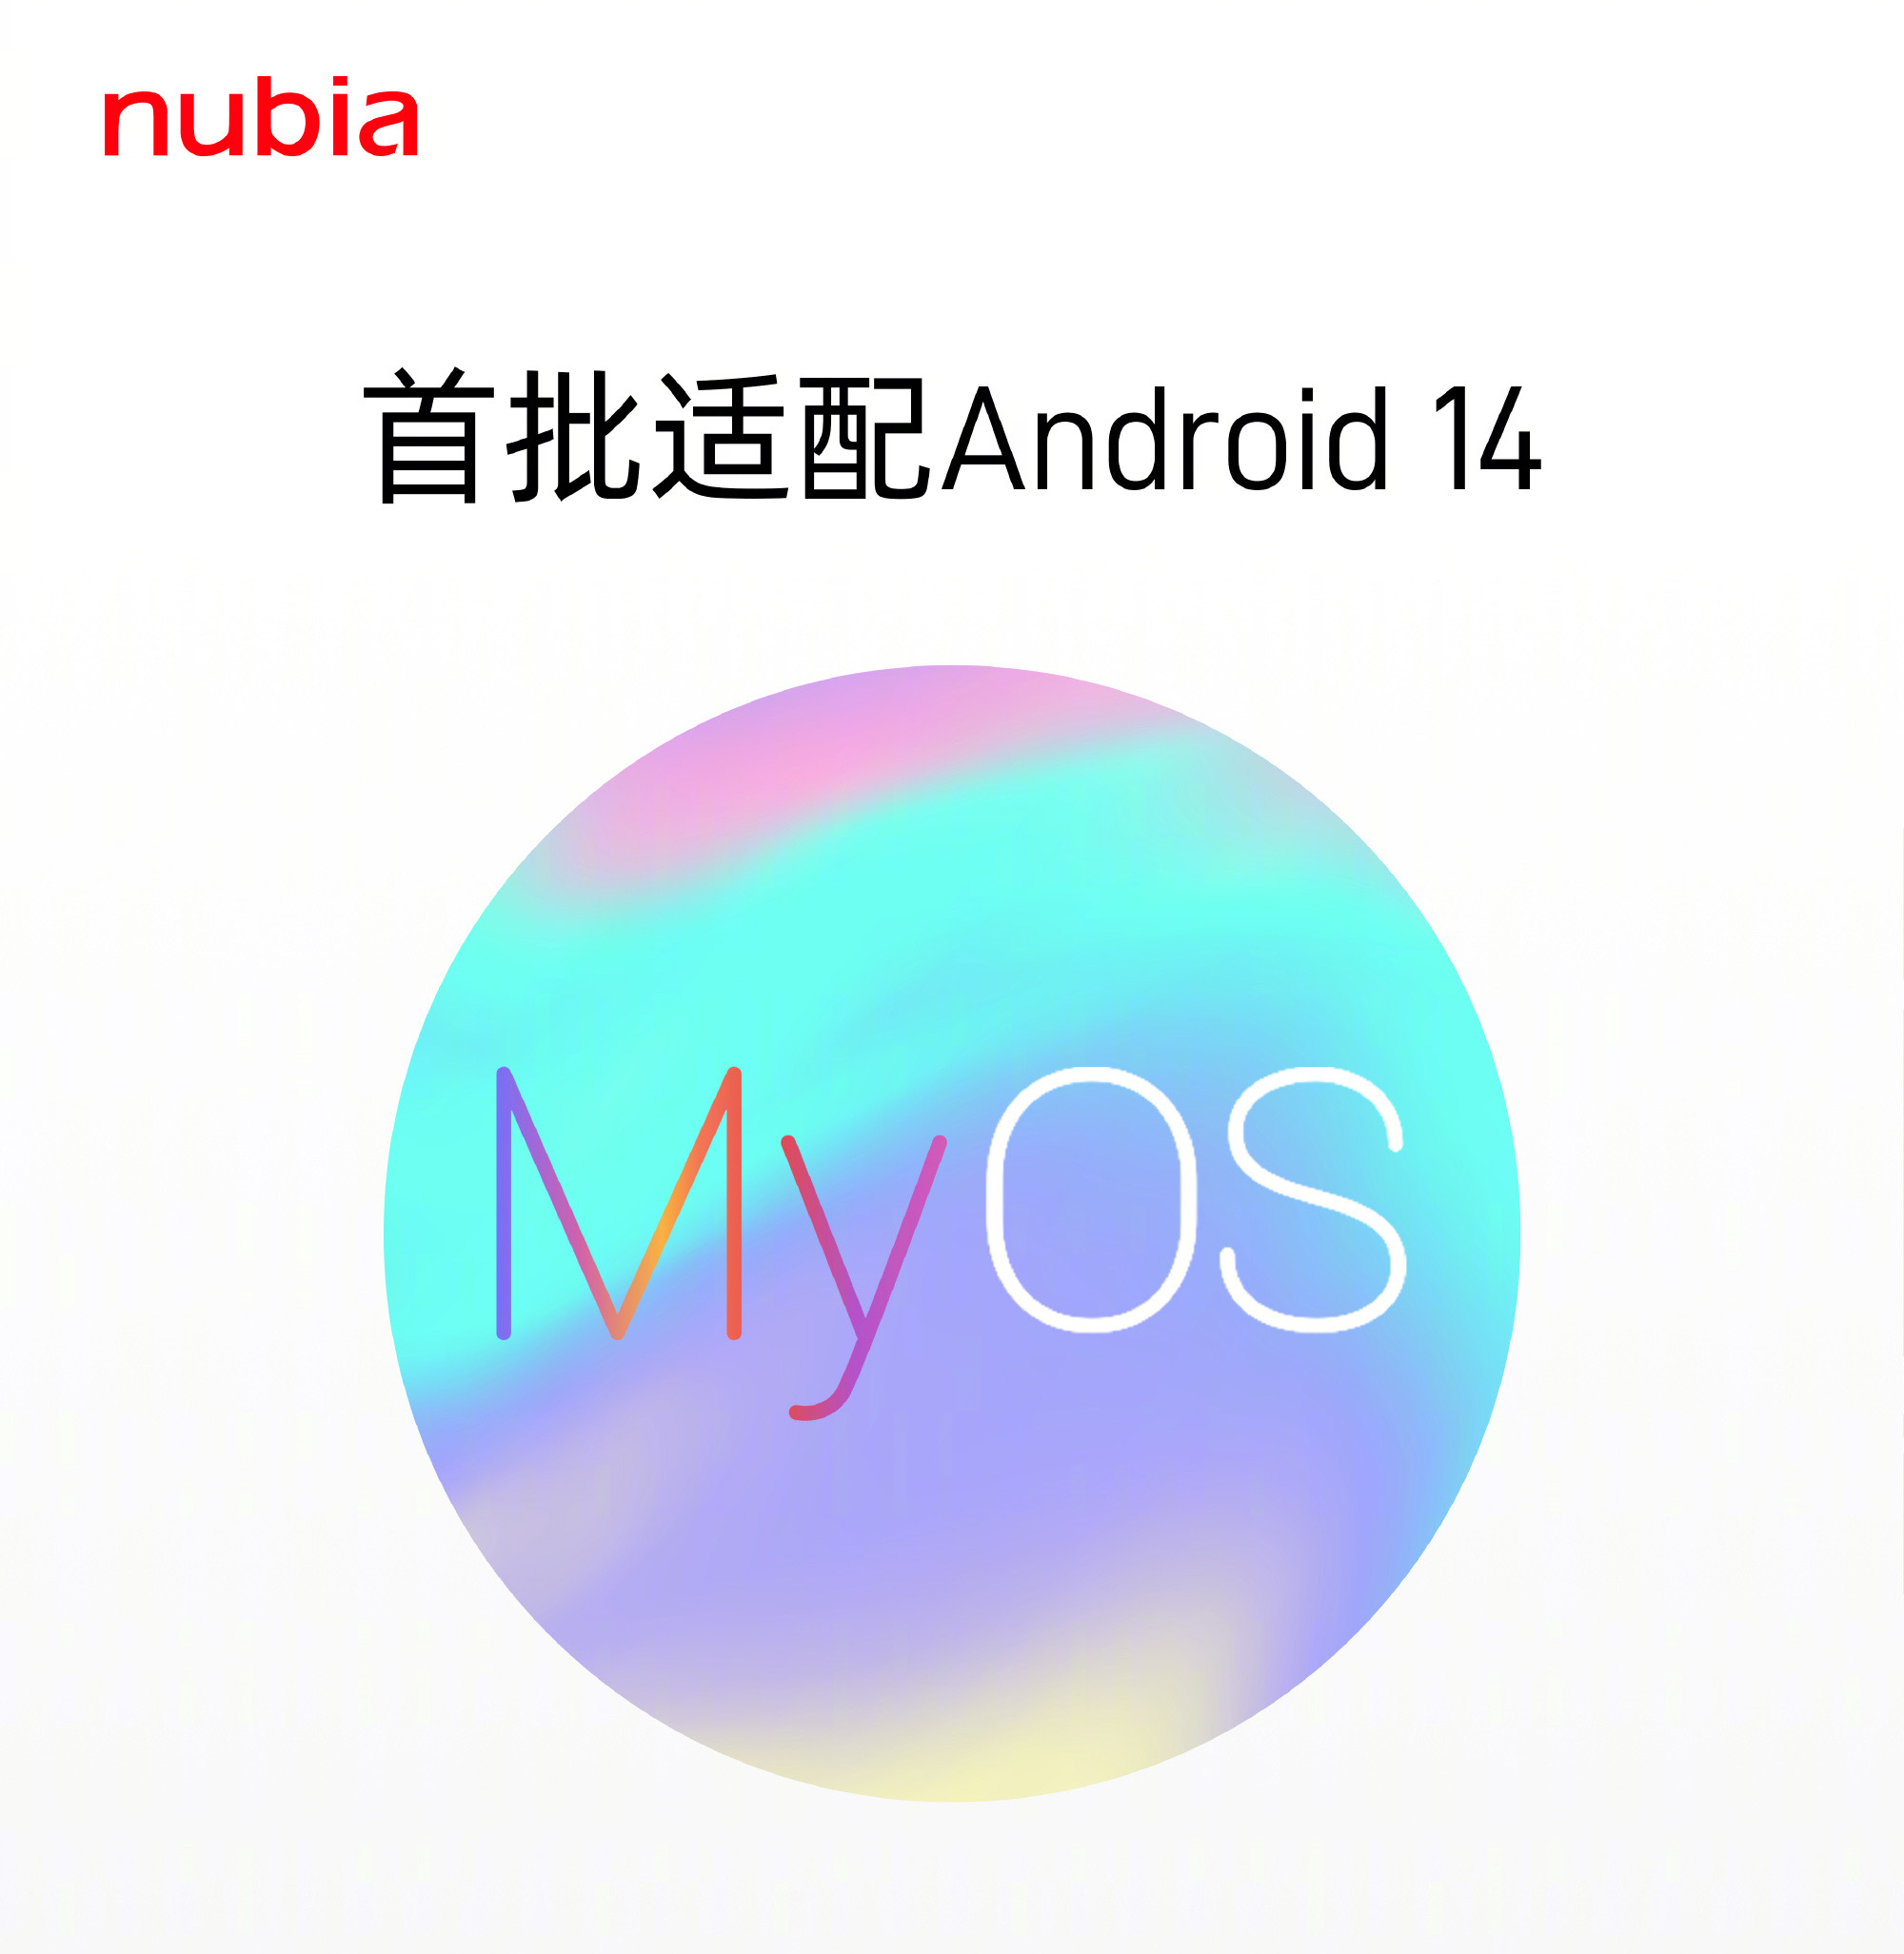  MyOS 13.5 на базе Android 14 для смартфонов Nubia Мир Android  - myos_135_na_baze_android_14_predstavlena_dla_smartfonov_nubia_picture2_0